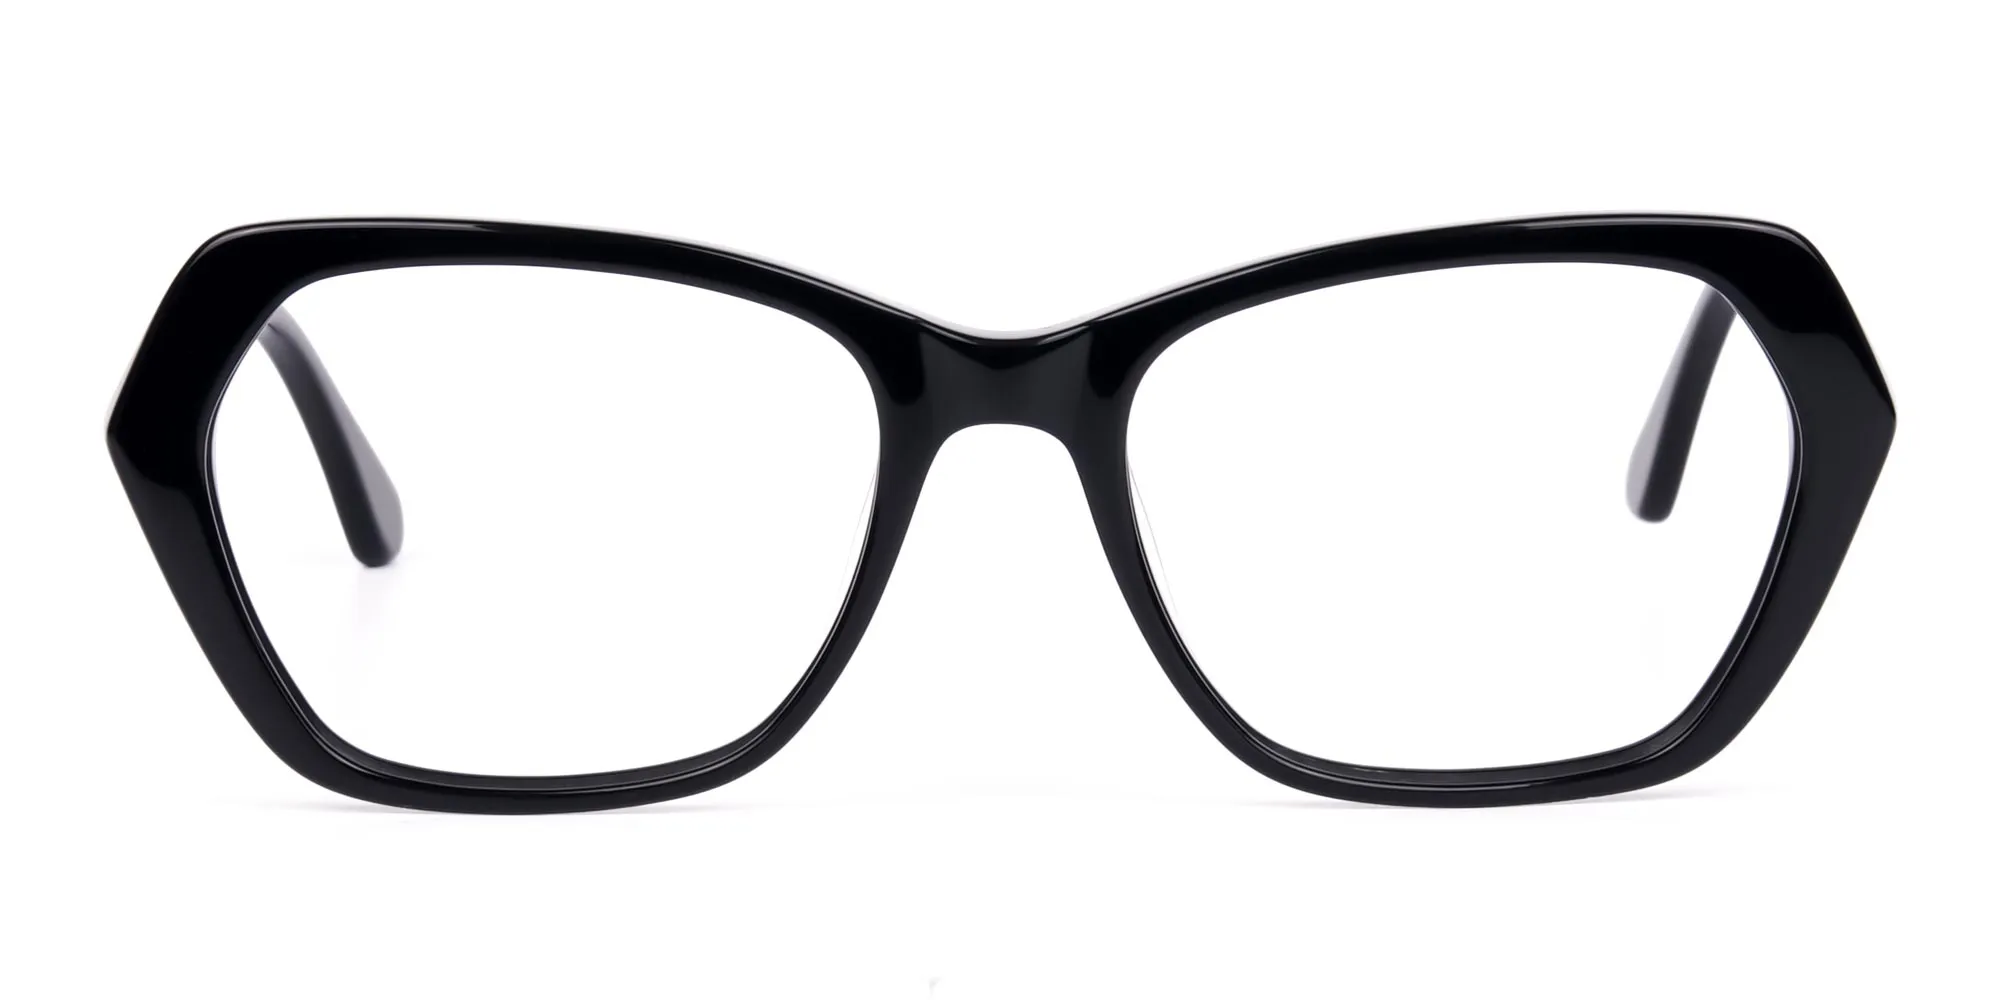 Thick Black Cat Eye Glasses